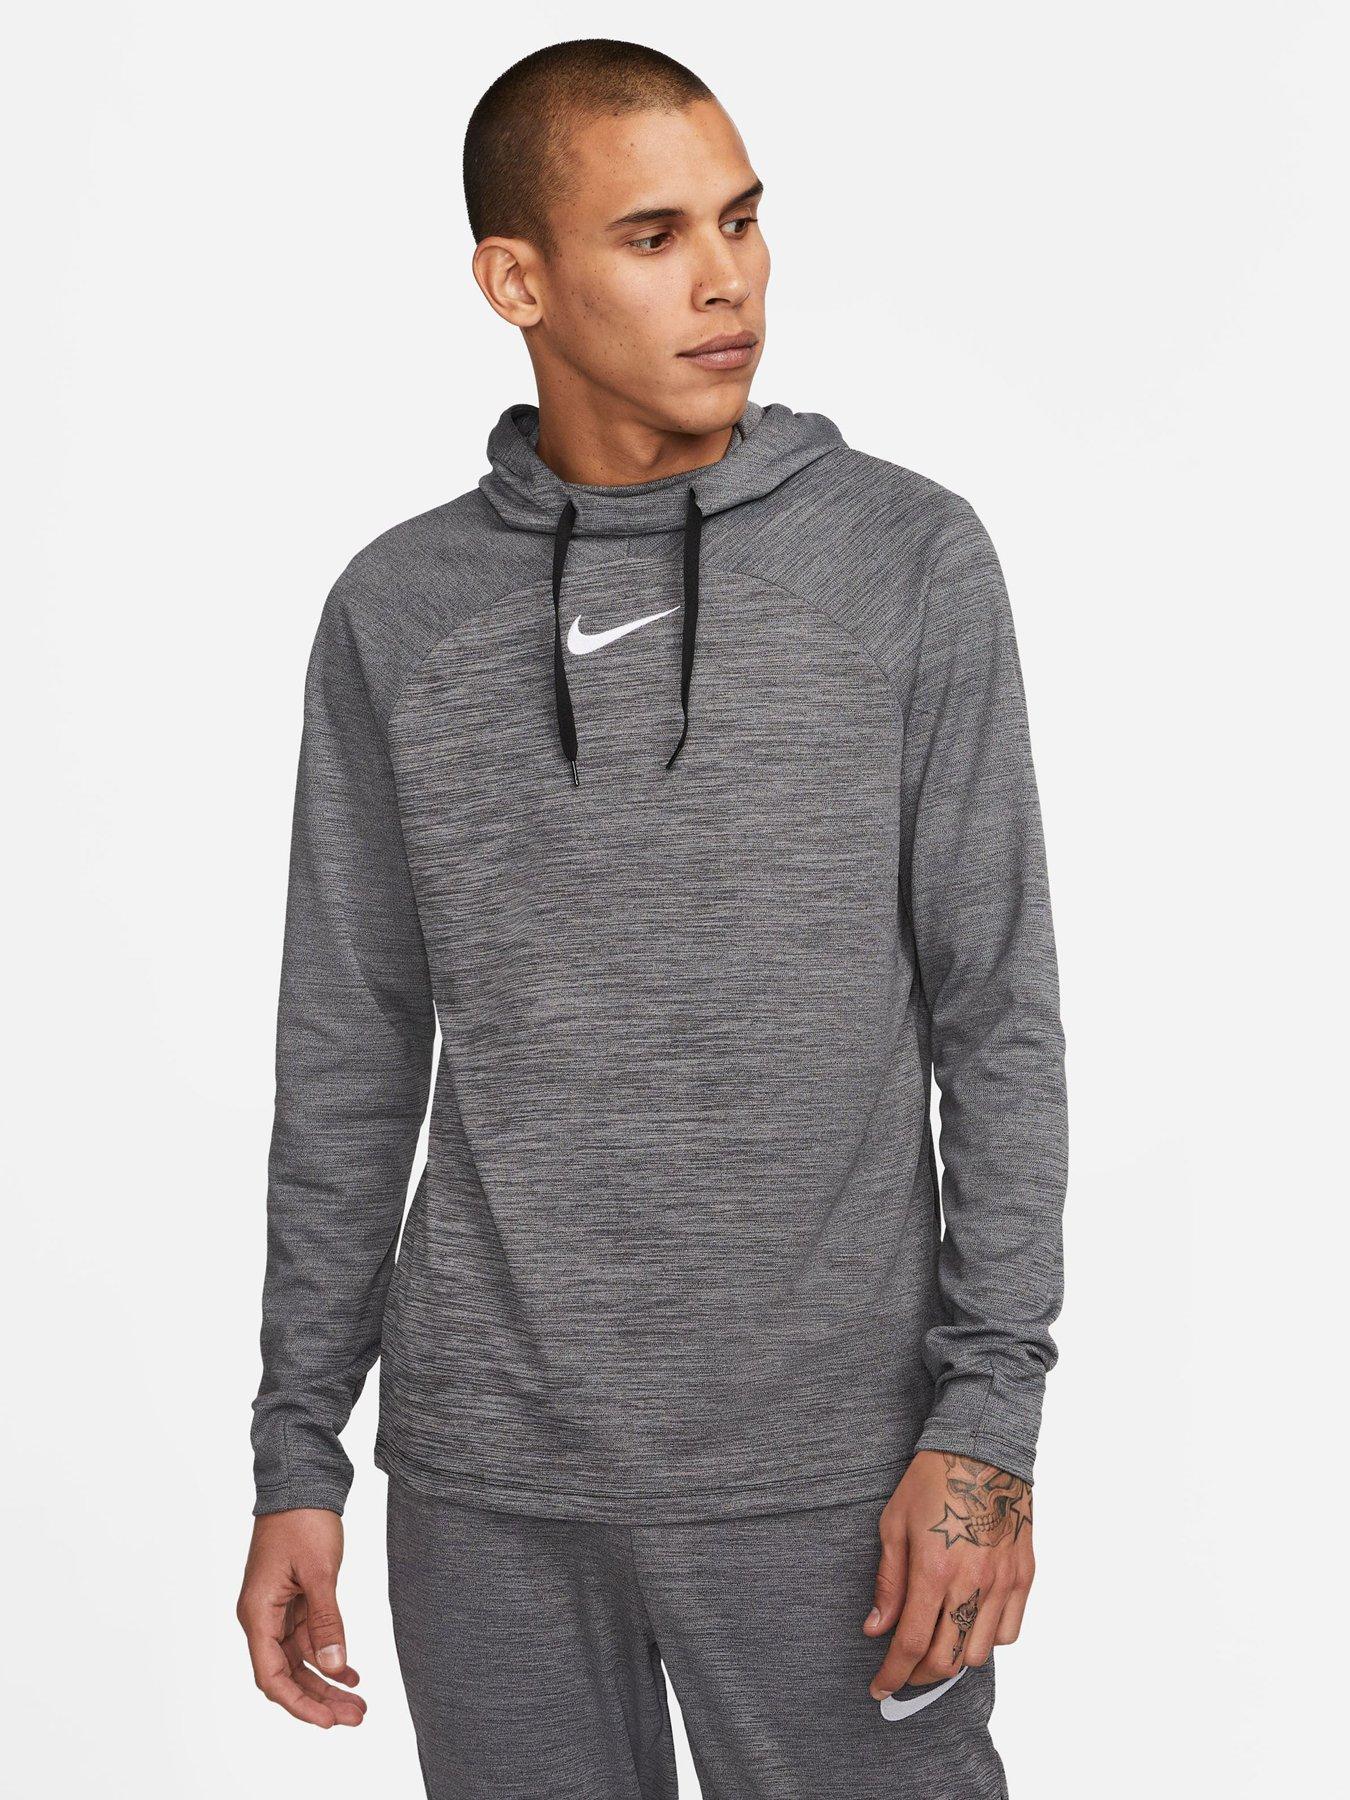 Circunferencia Higgins Controversia Men's Nike Hoodies, Sweatshirts & Jumpers | Very.co.uk